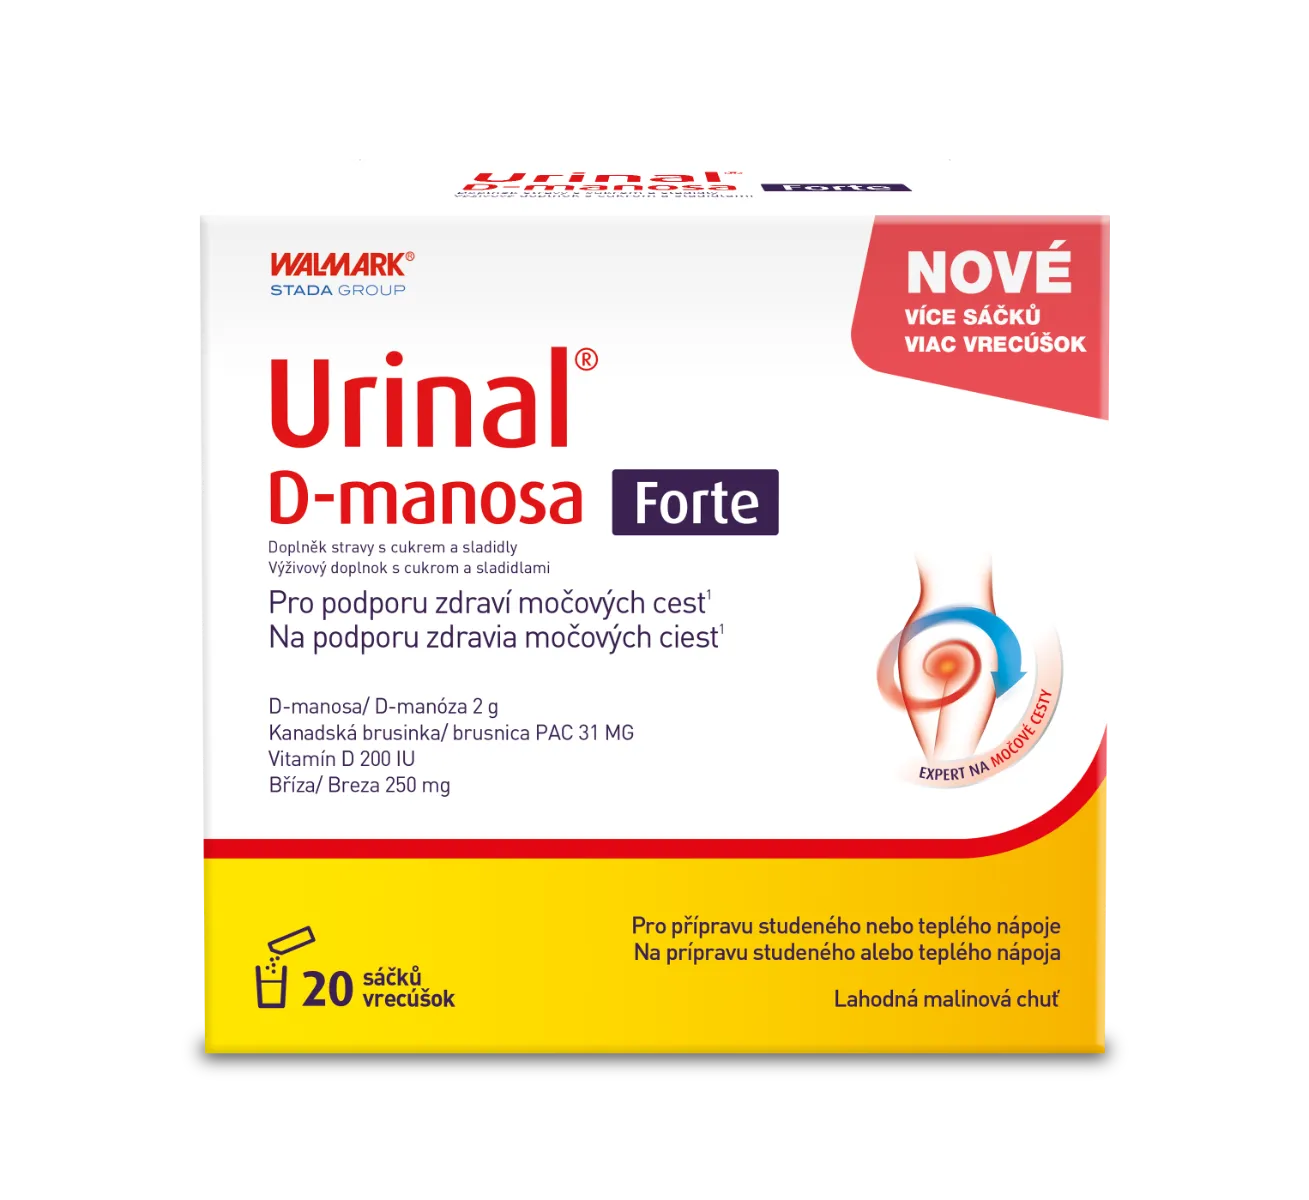 Walmark Urinal D-manosa Forte 20 sáčků